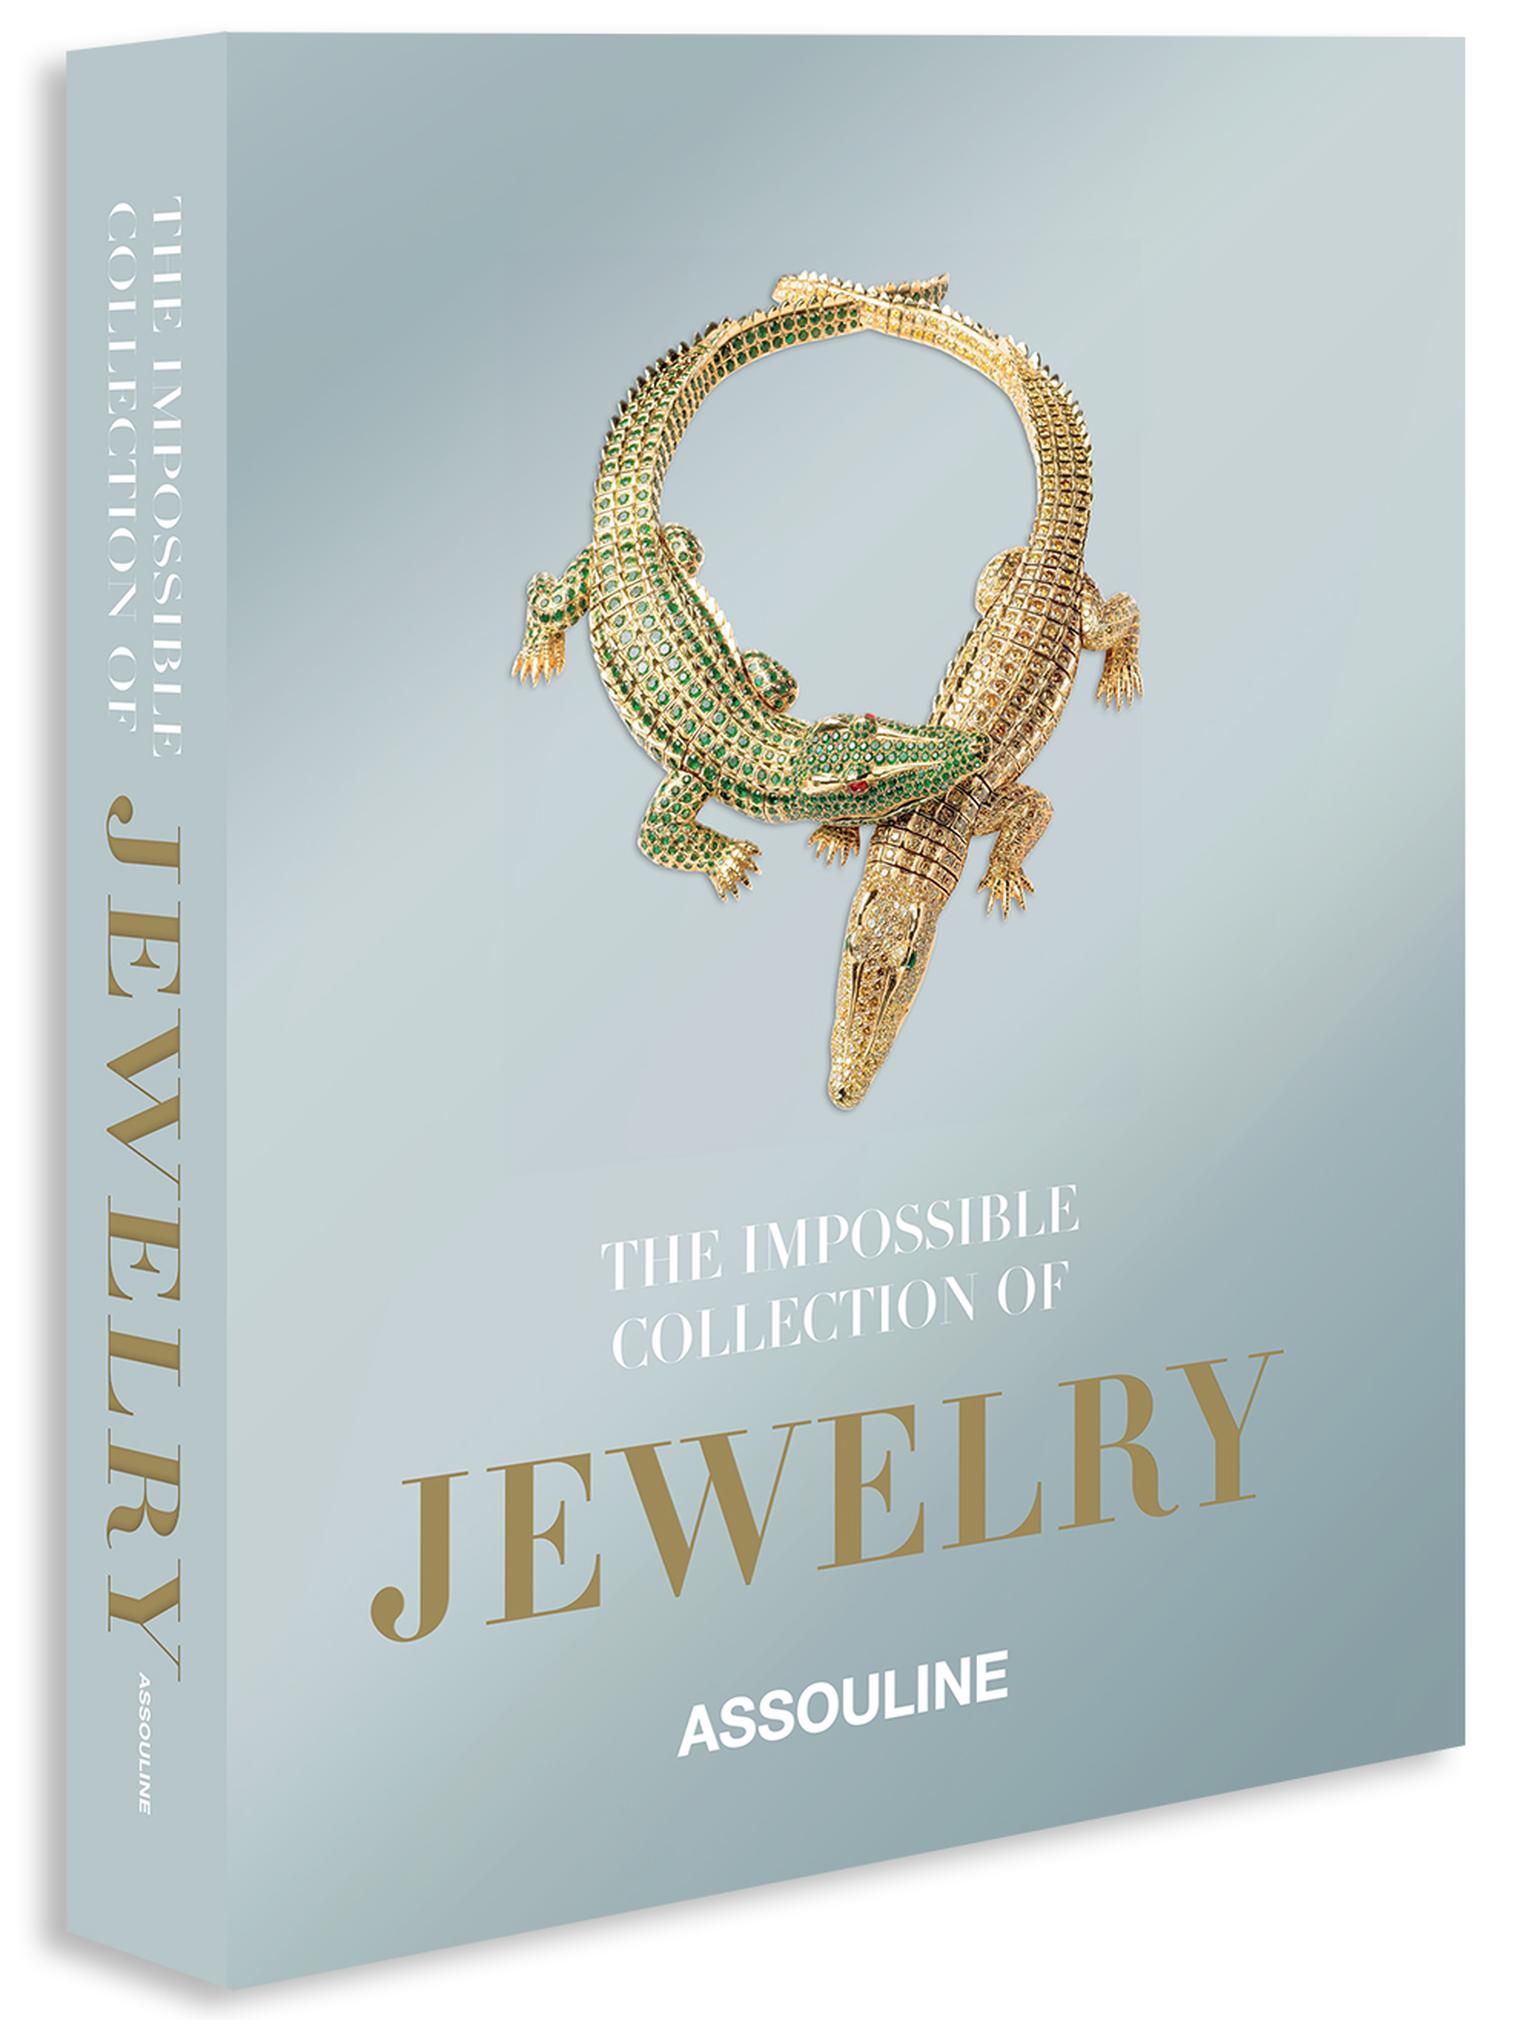 Louis Vuitton Unveils New Assouline Book